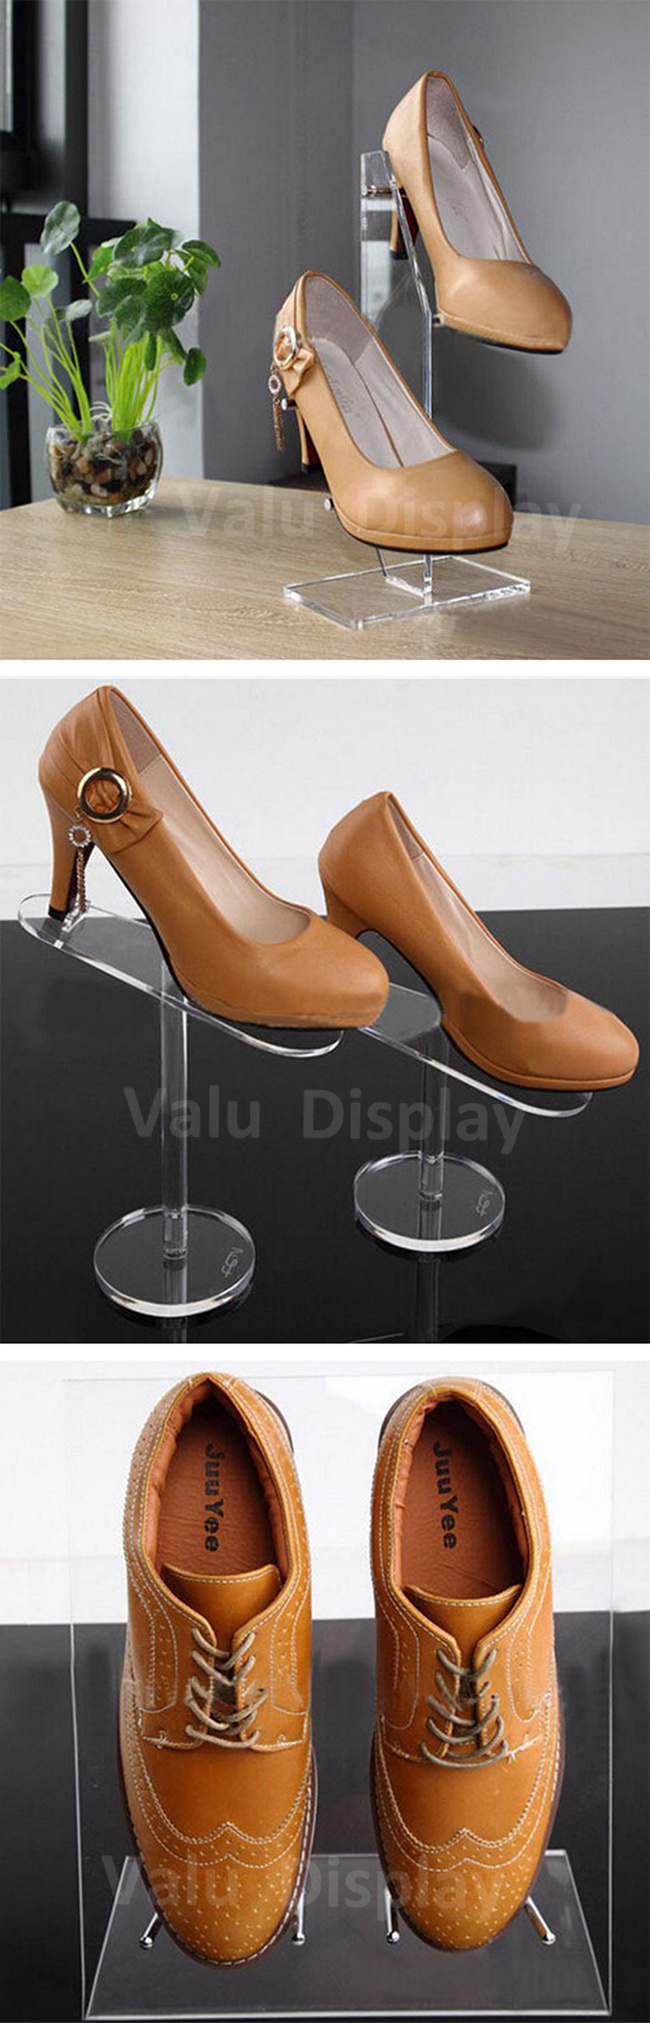 Acrylic Lady Shoes Display Rack, Sandal Display Stand